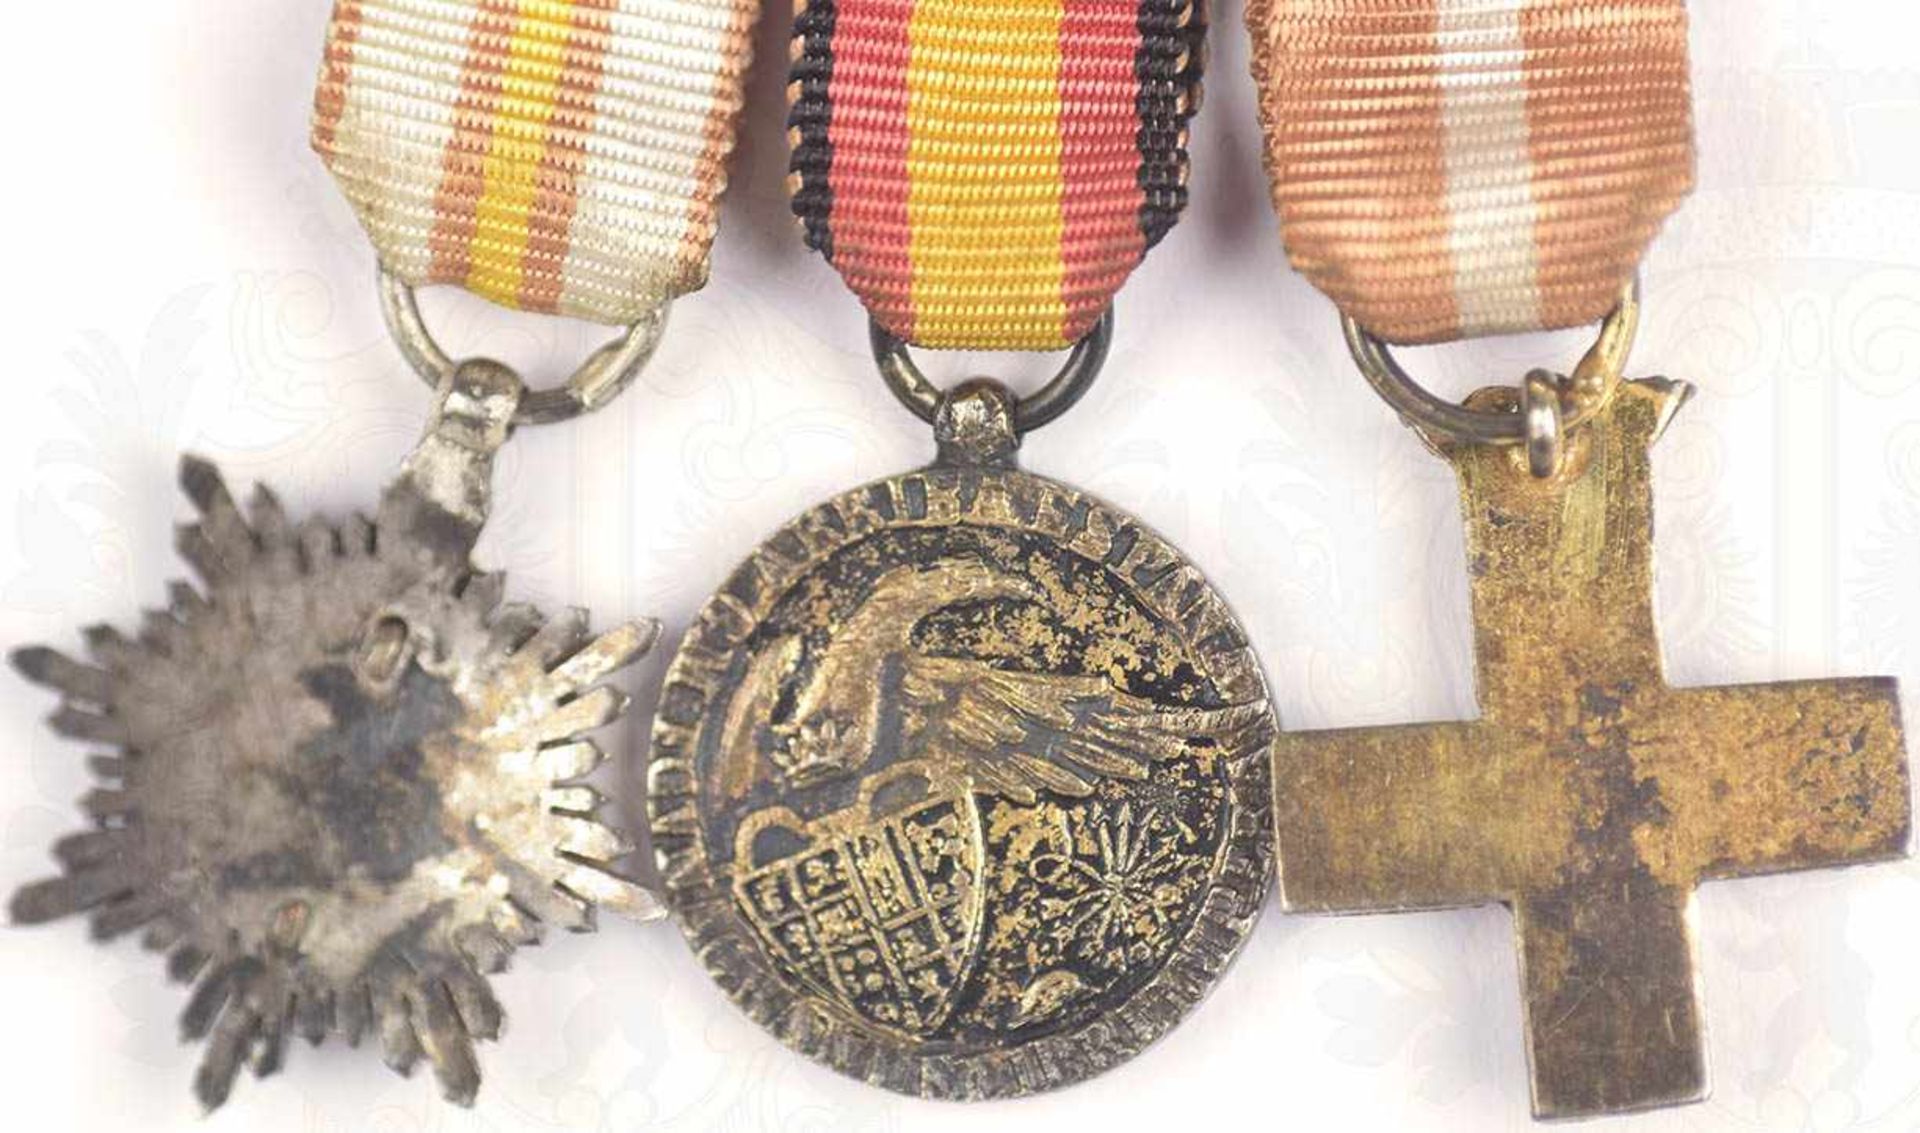 MINIATUR-ORDENSPANGE, Militärverdienstorden/Medaille de la Campagna/Siegeskreuz Cruz de Guerra, - Bild 3 aus 3